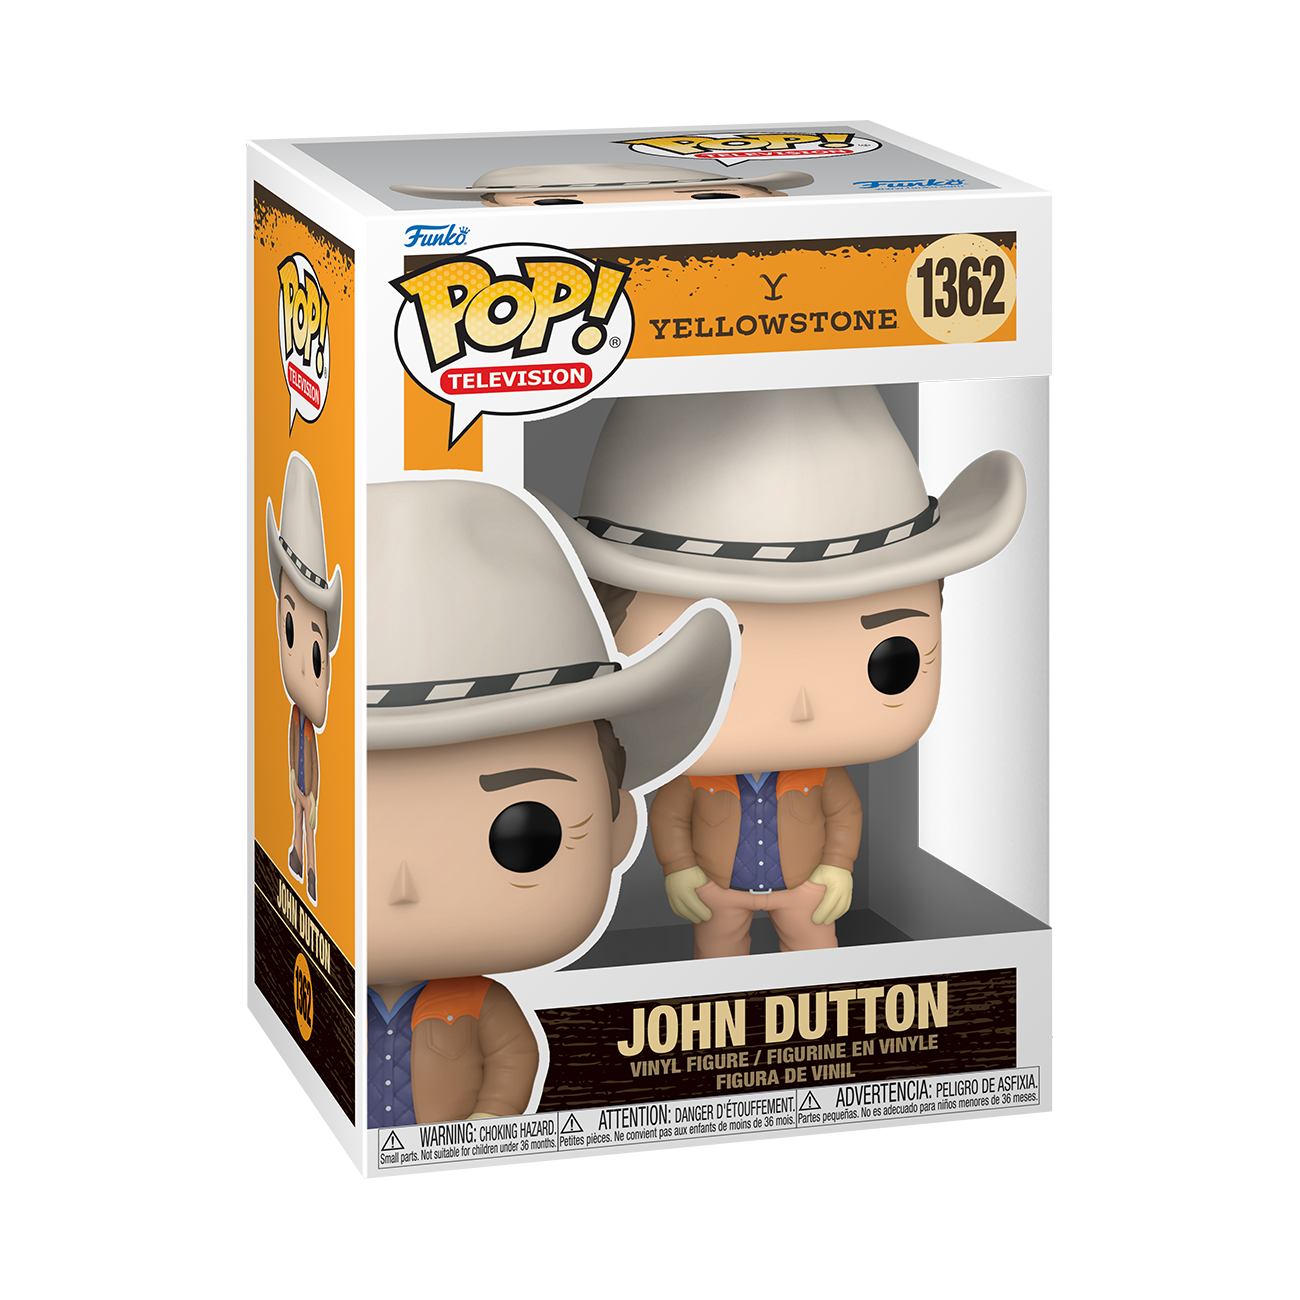 Yellowstone John Dutton Funko Pop! Vinyl Figure